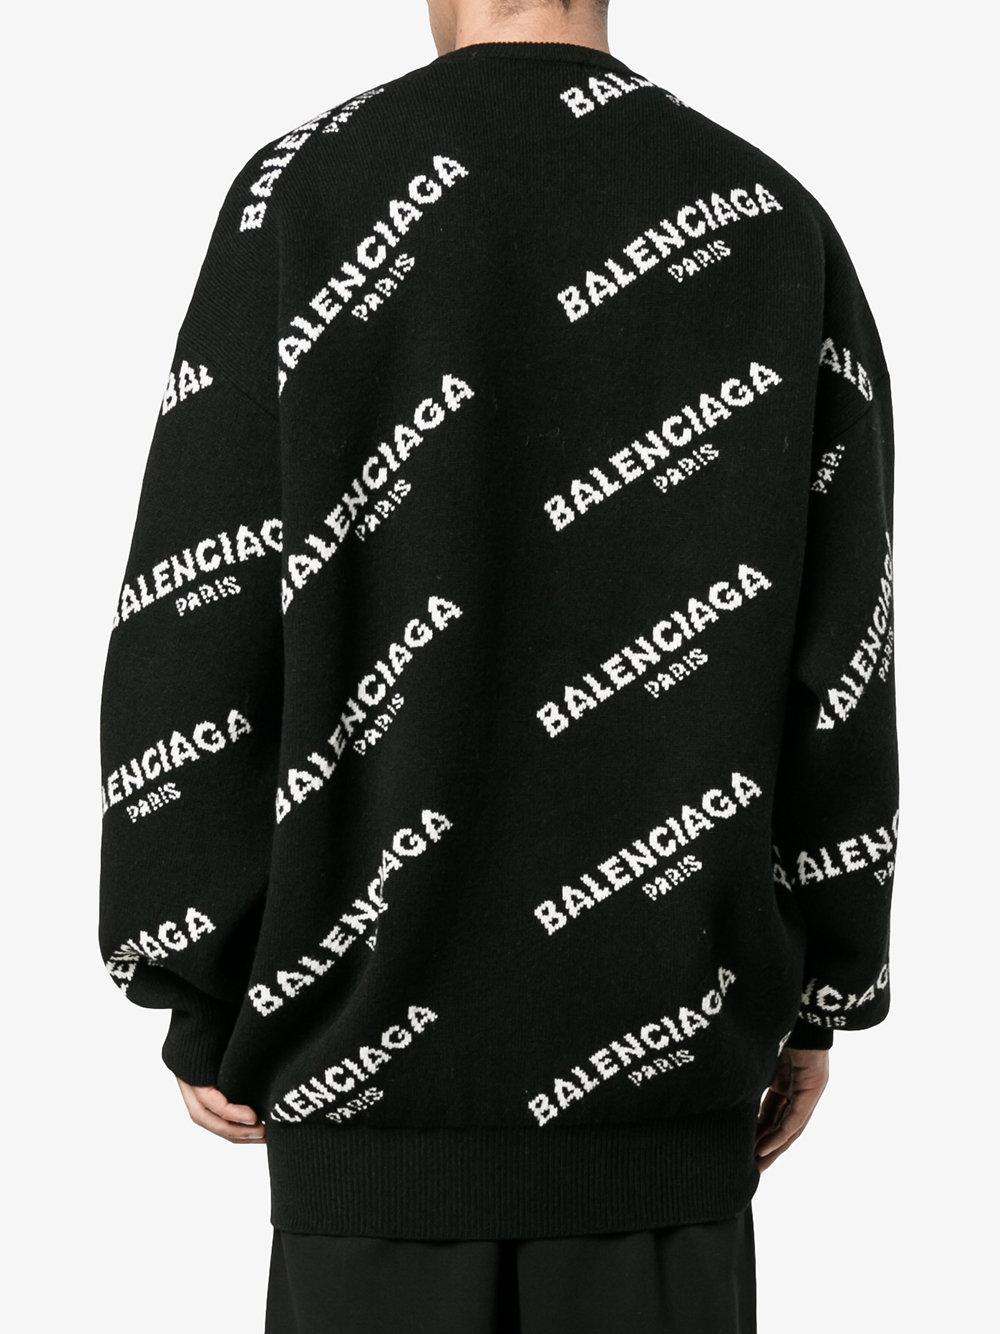 Fisker Og så videre Troubled Balenciaga Wool Oversized All-over Logo Sweatshirt in Black for Men - Lyst